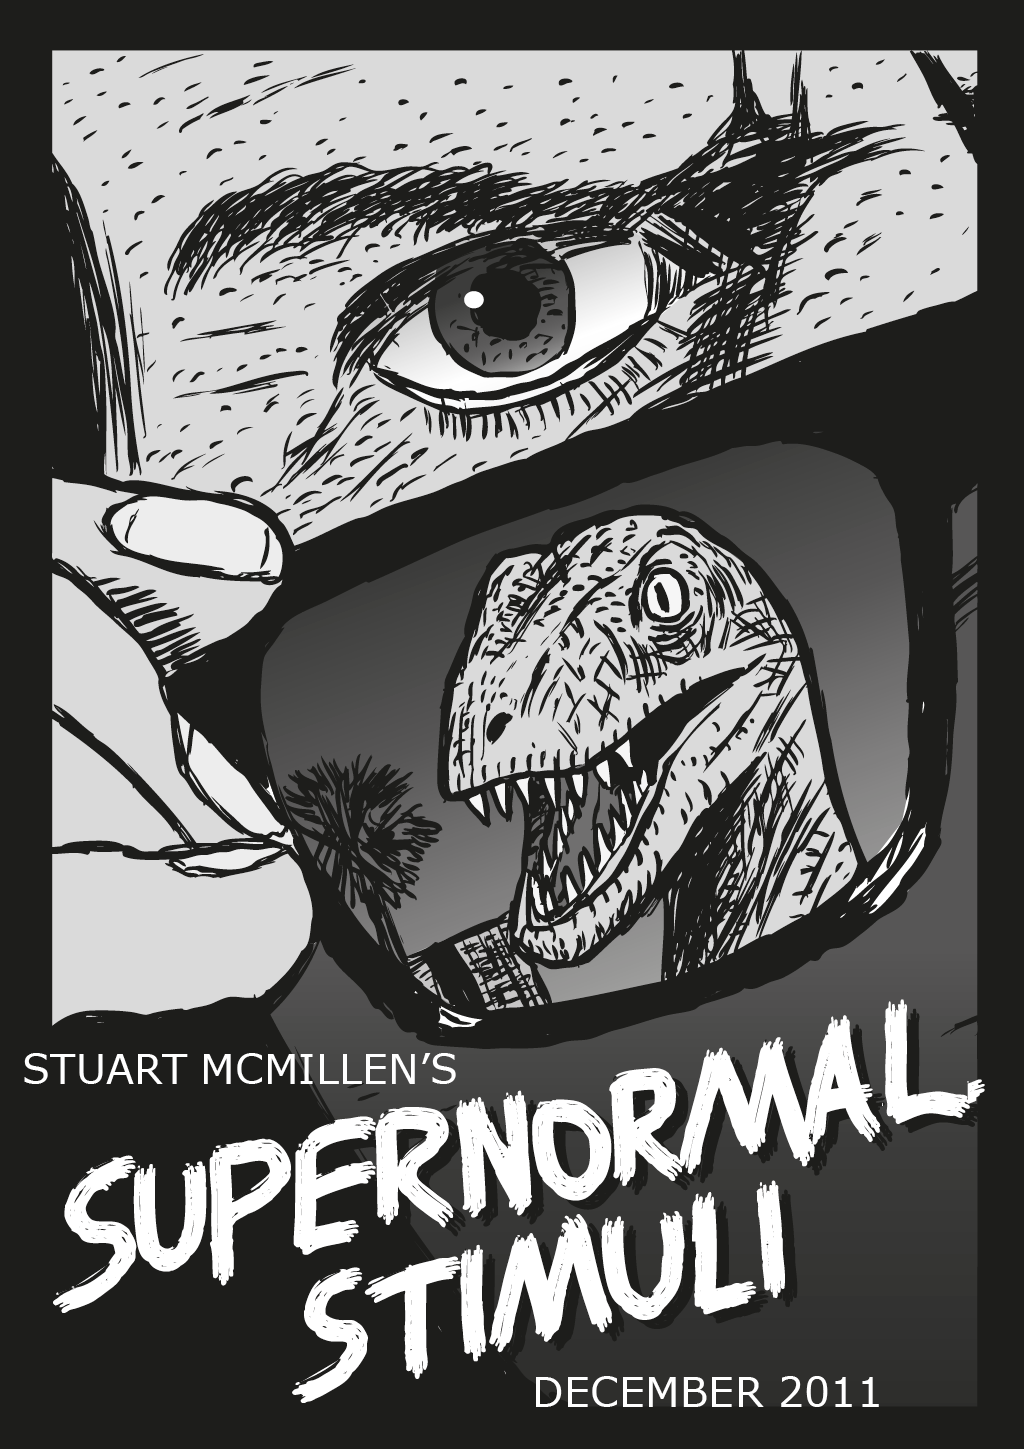 Supernormal Stimuli comic book cover artwork